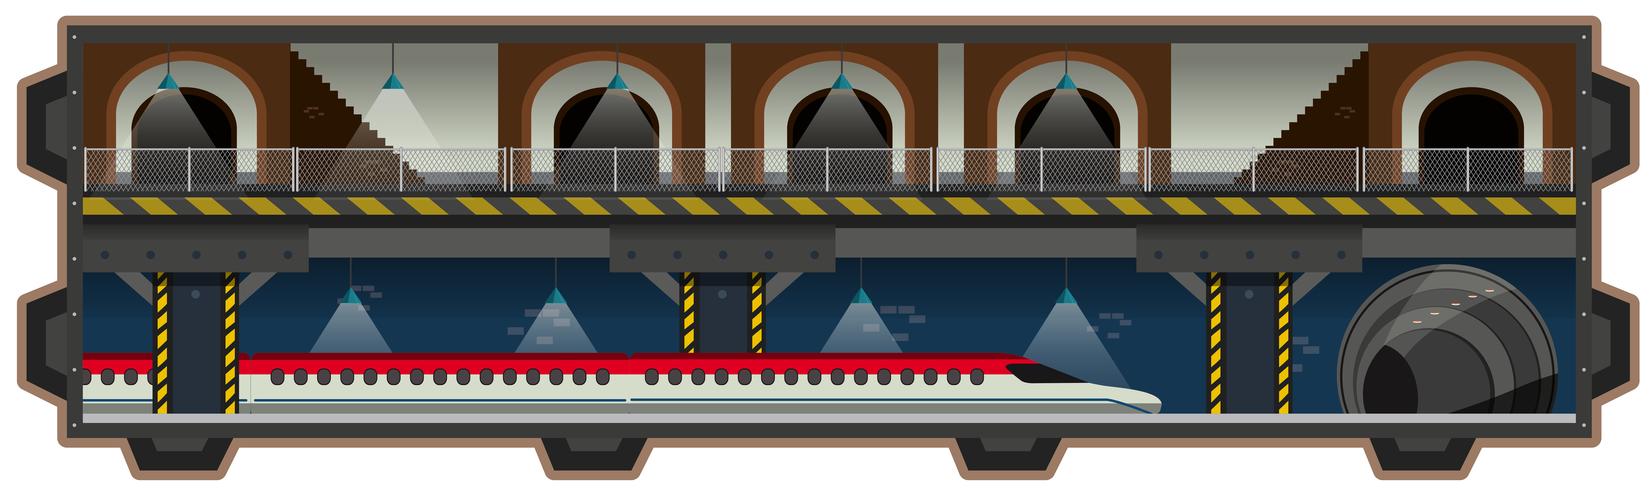 En tunnelbana på vit bakgrund vektor